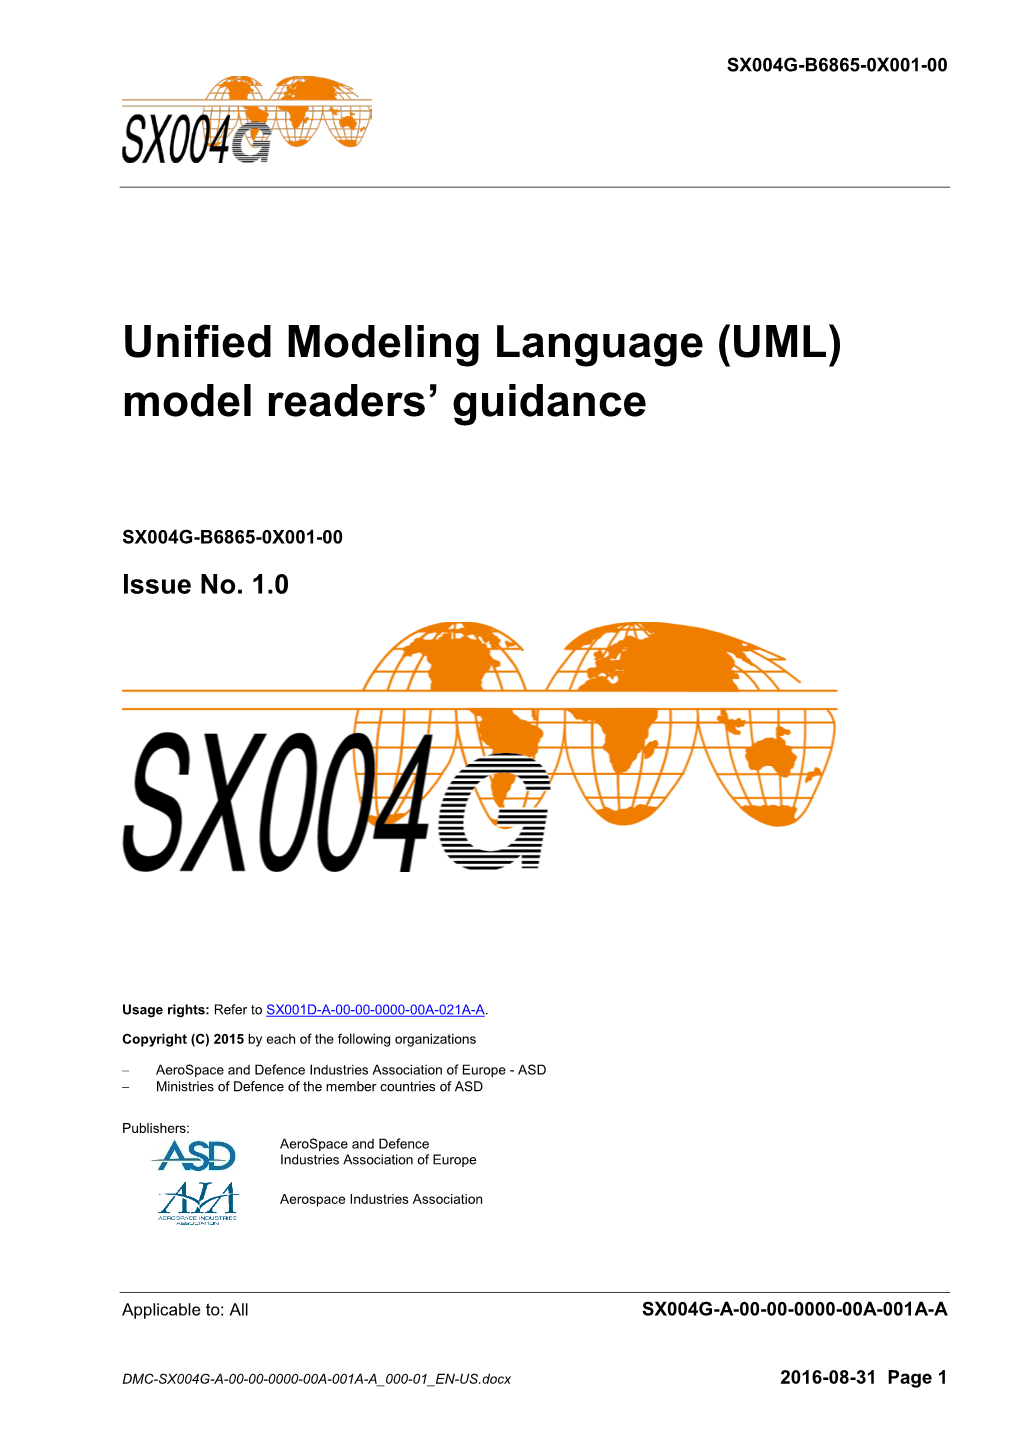 Unified Modeling Language (UML) Model Readers’ Guidance